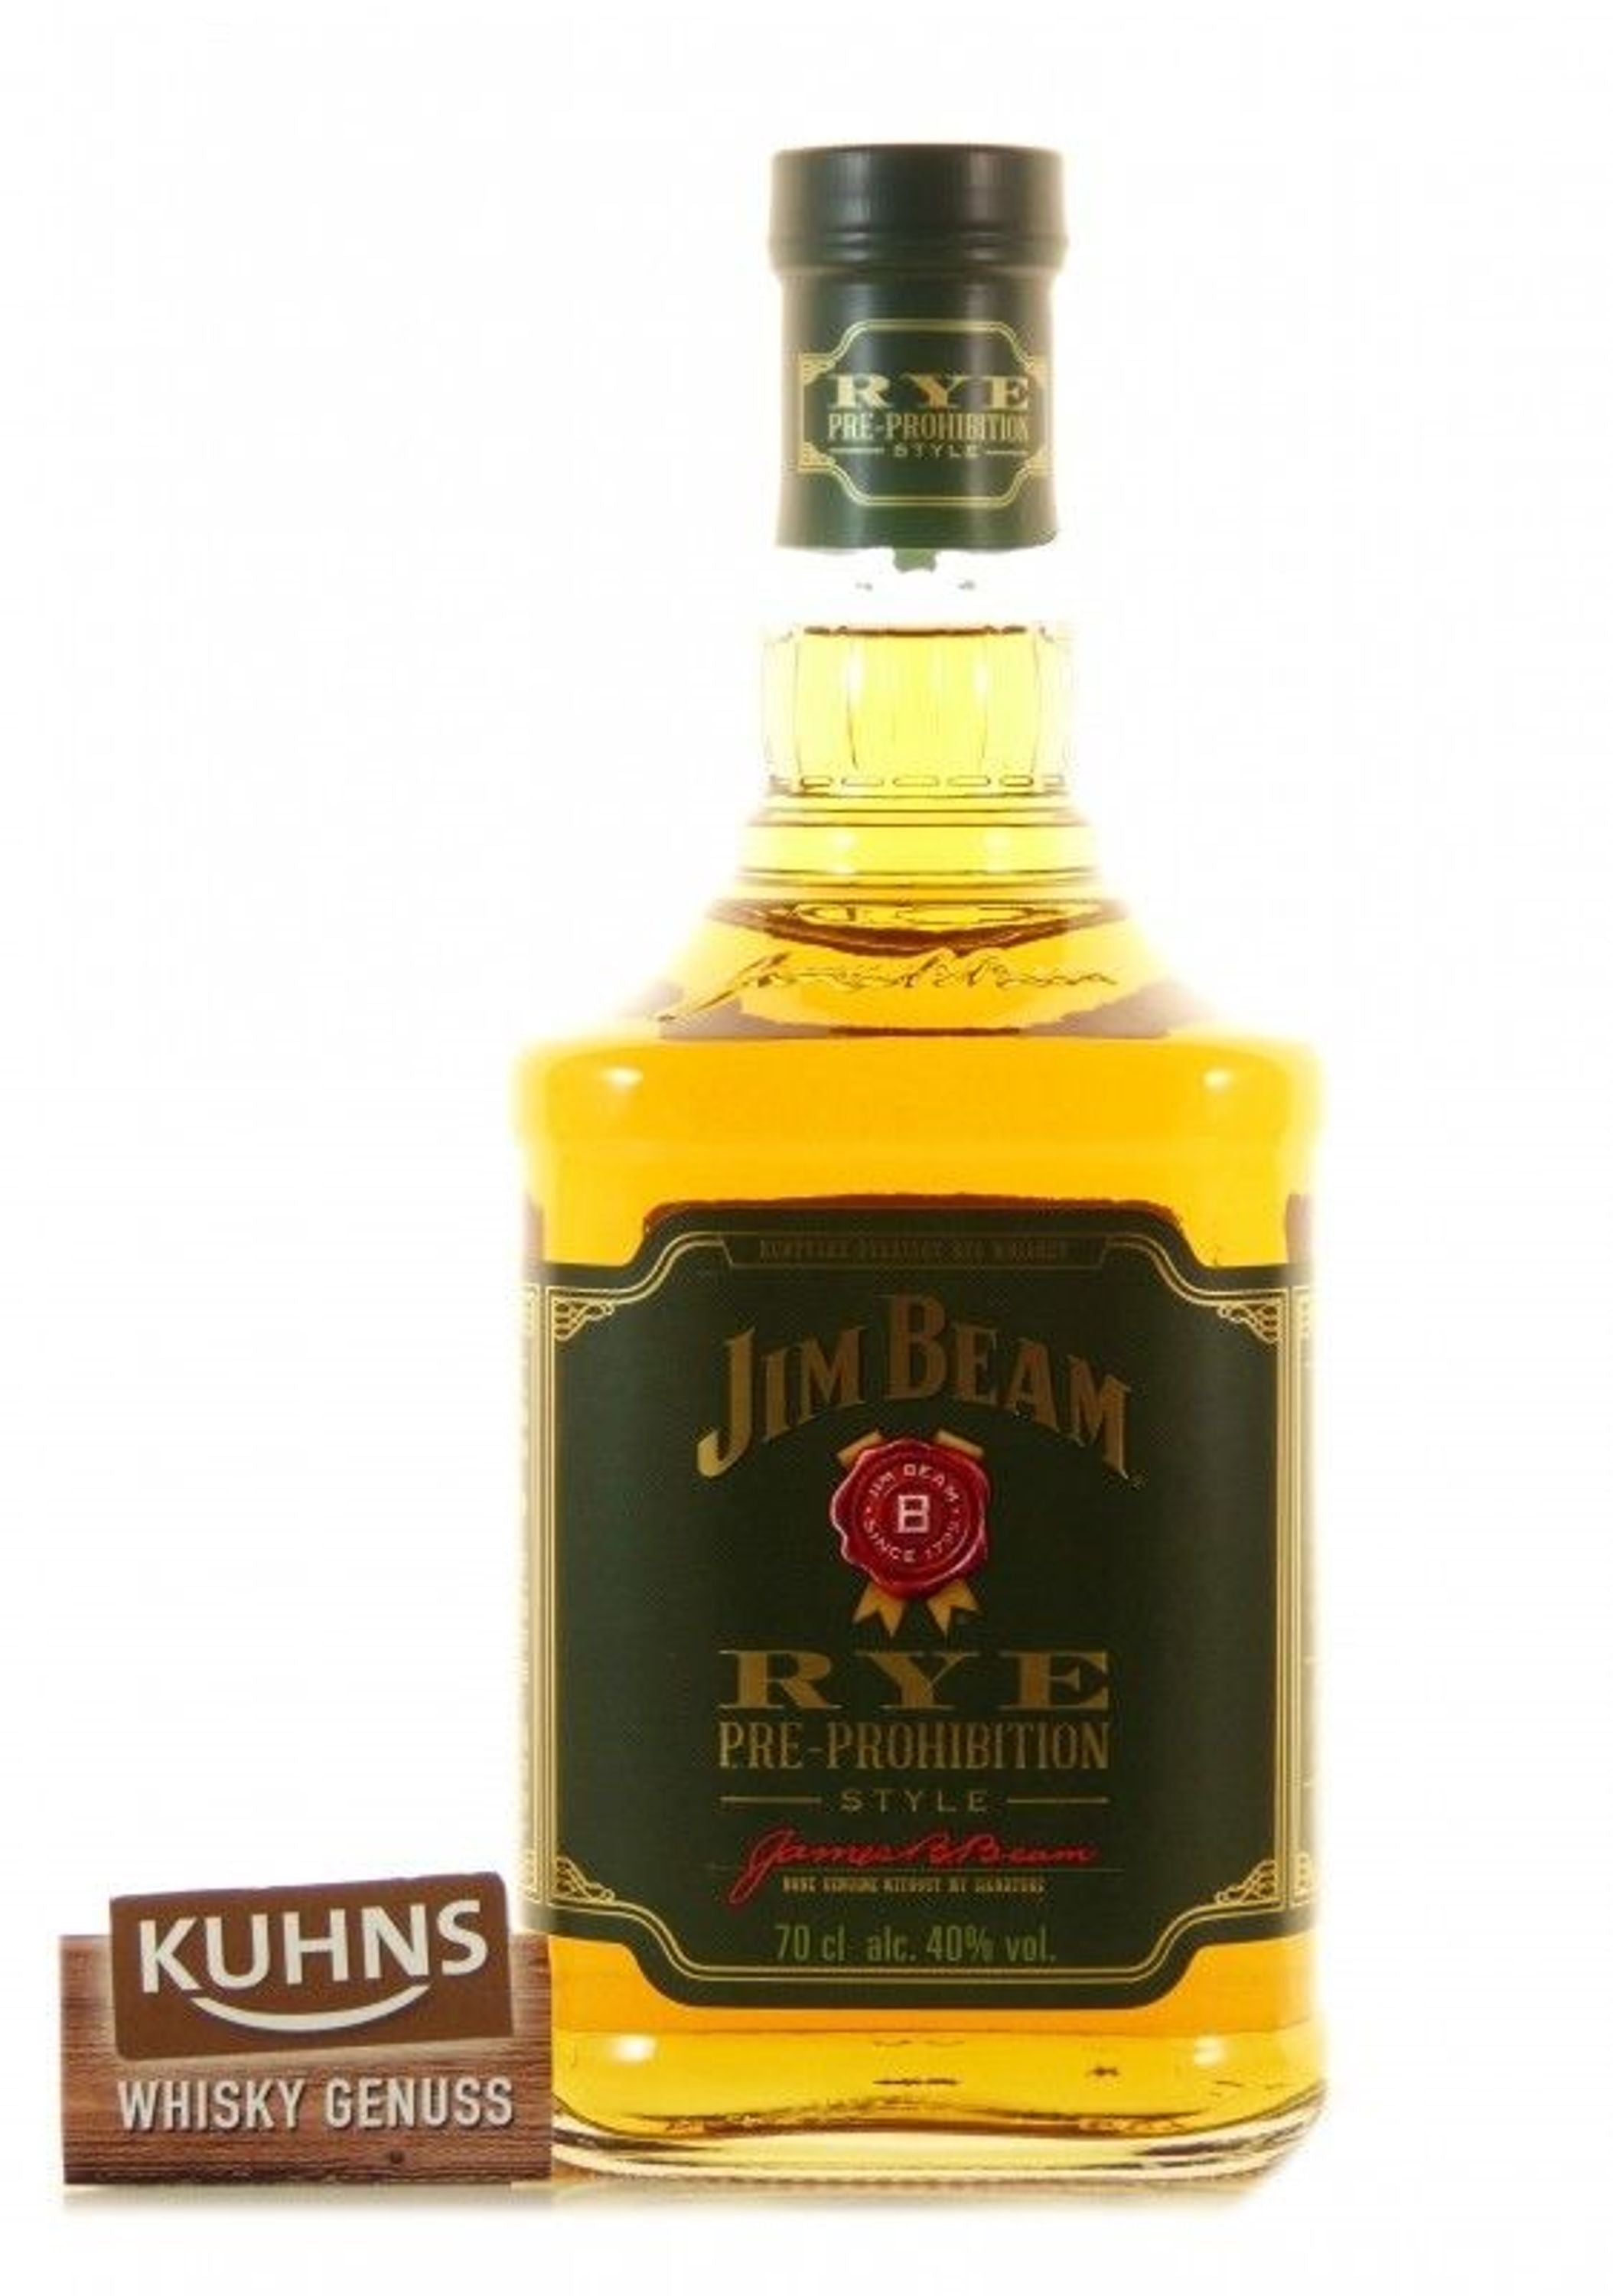 Jim Beam Rye Kentucky Straight Rye Whiskey 0.7l, alc. 40% by volume